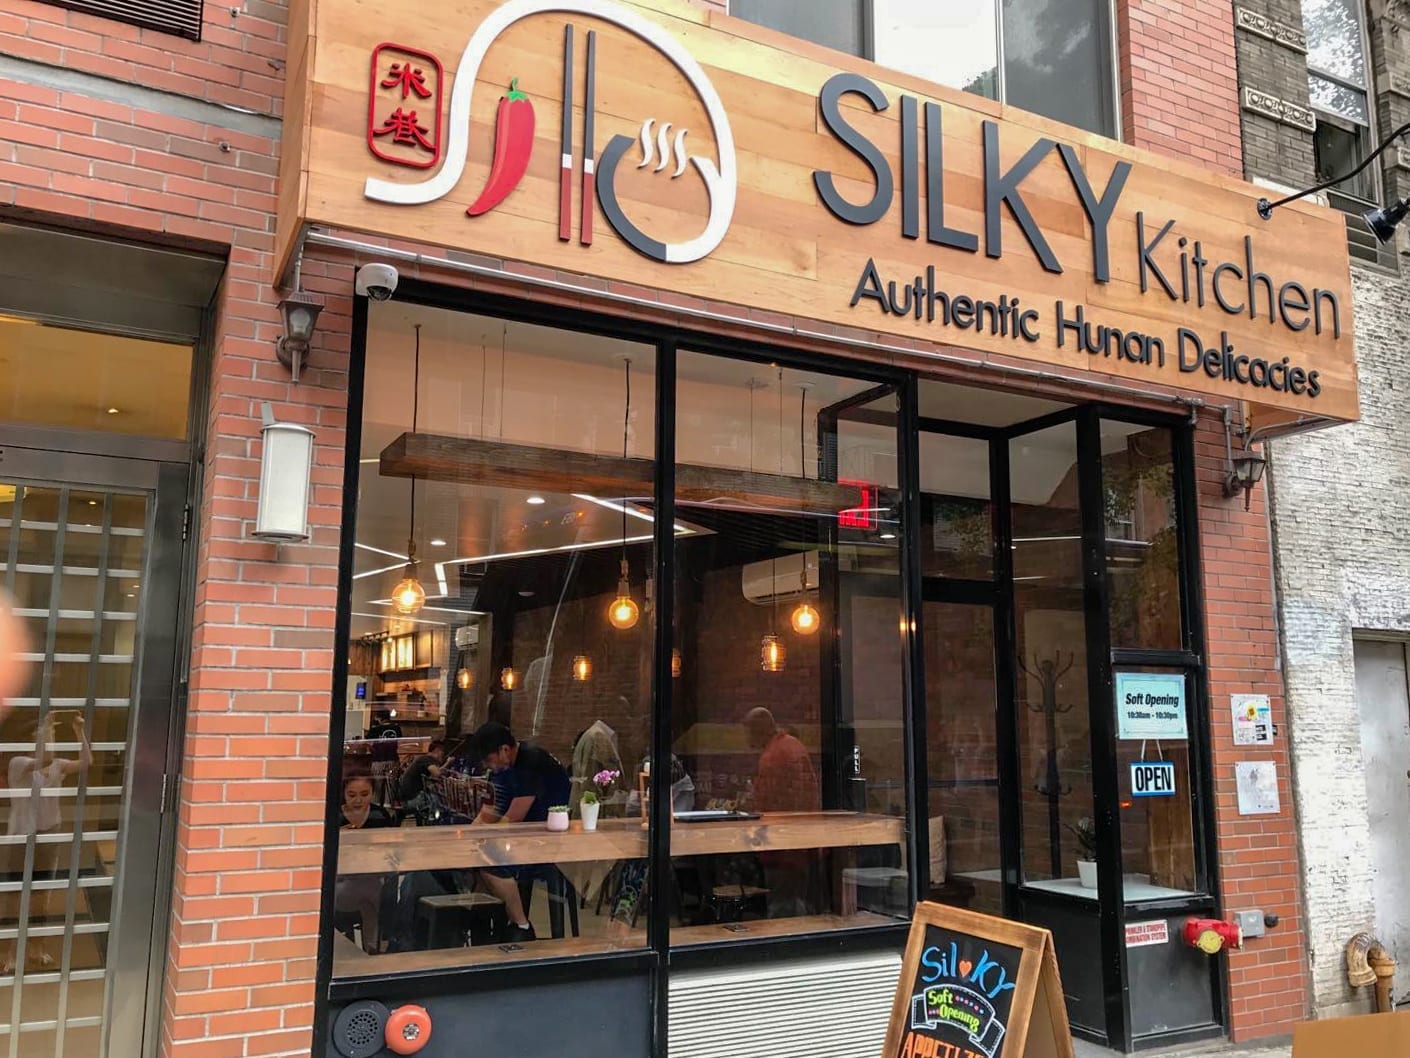 About Silky Kitchen